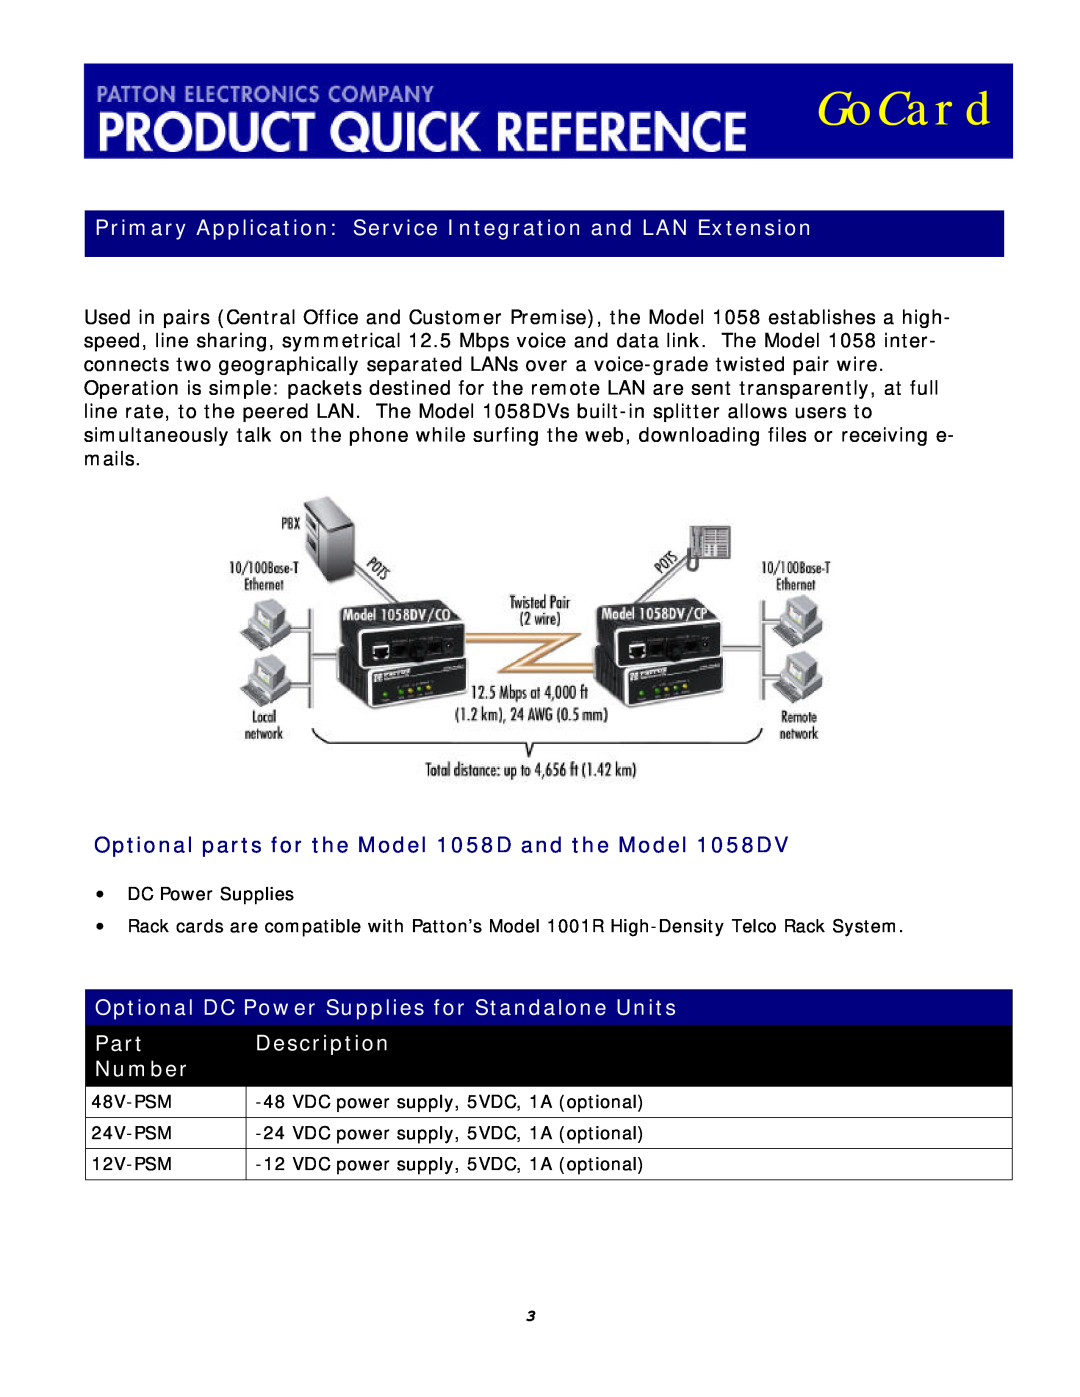 Patton electronic 1058DVRC Primary Application Service Integration and LAN Extension, Part, Description, Number, GoCard 